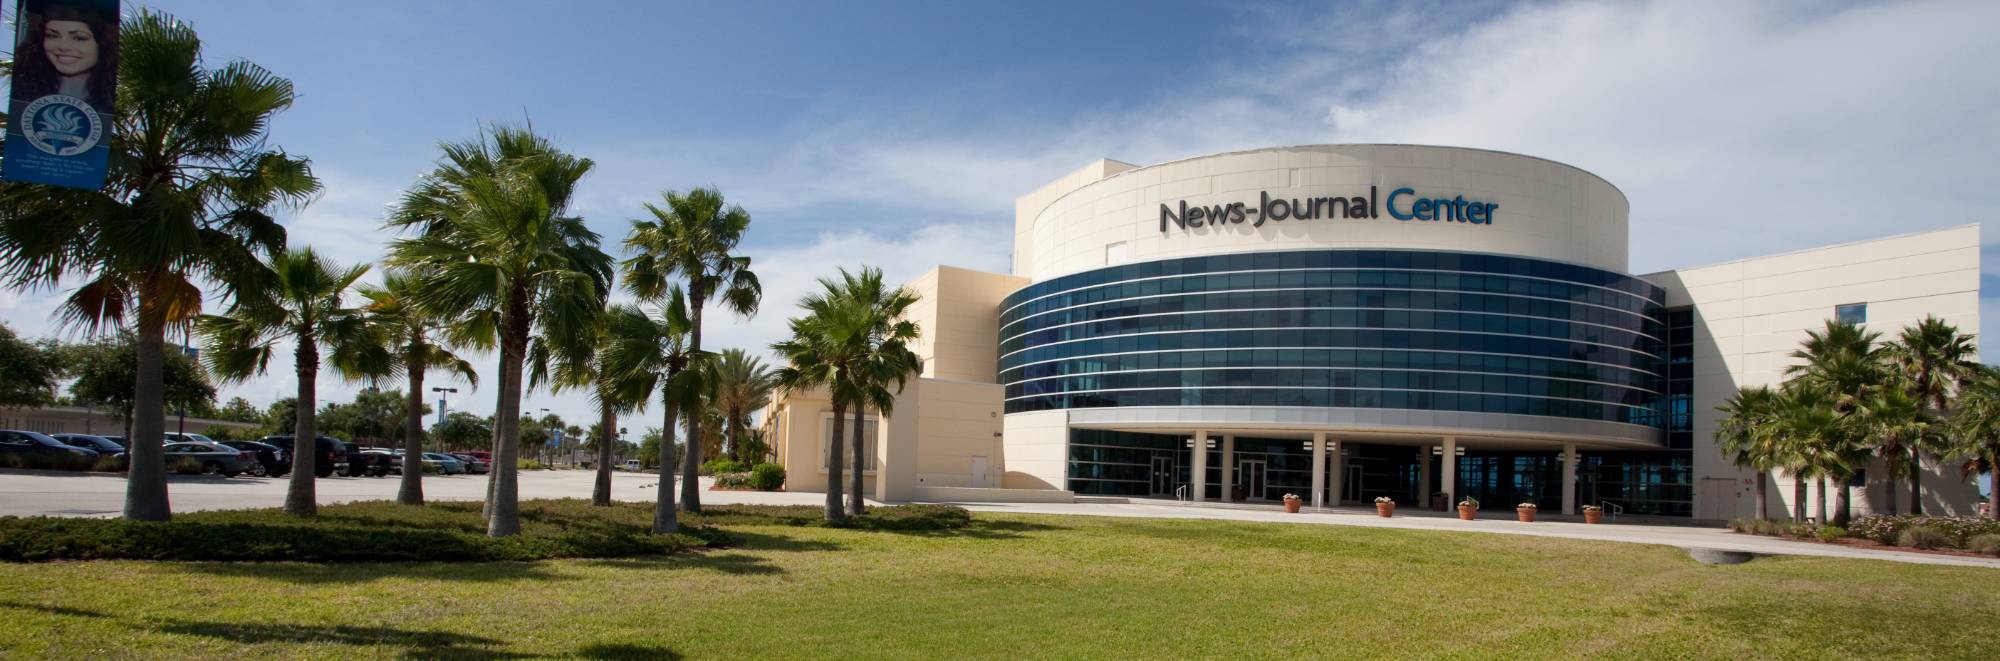 the News-Journal Center building in Daytona Beach, FL 